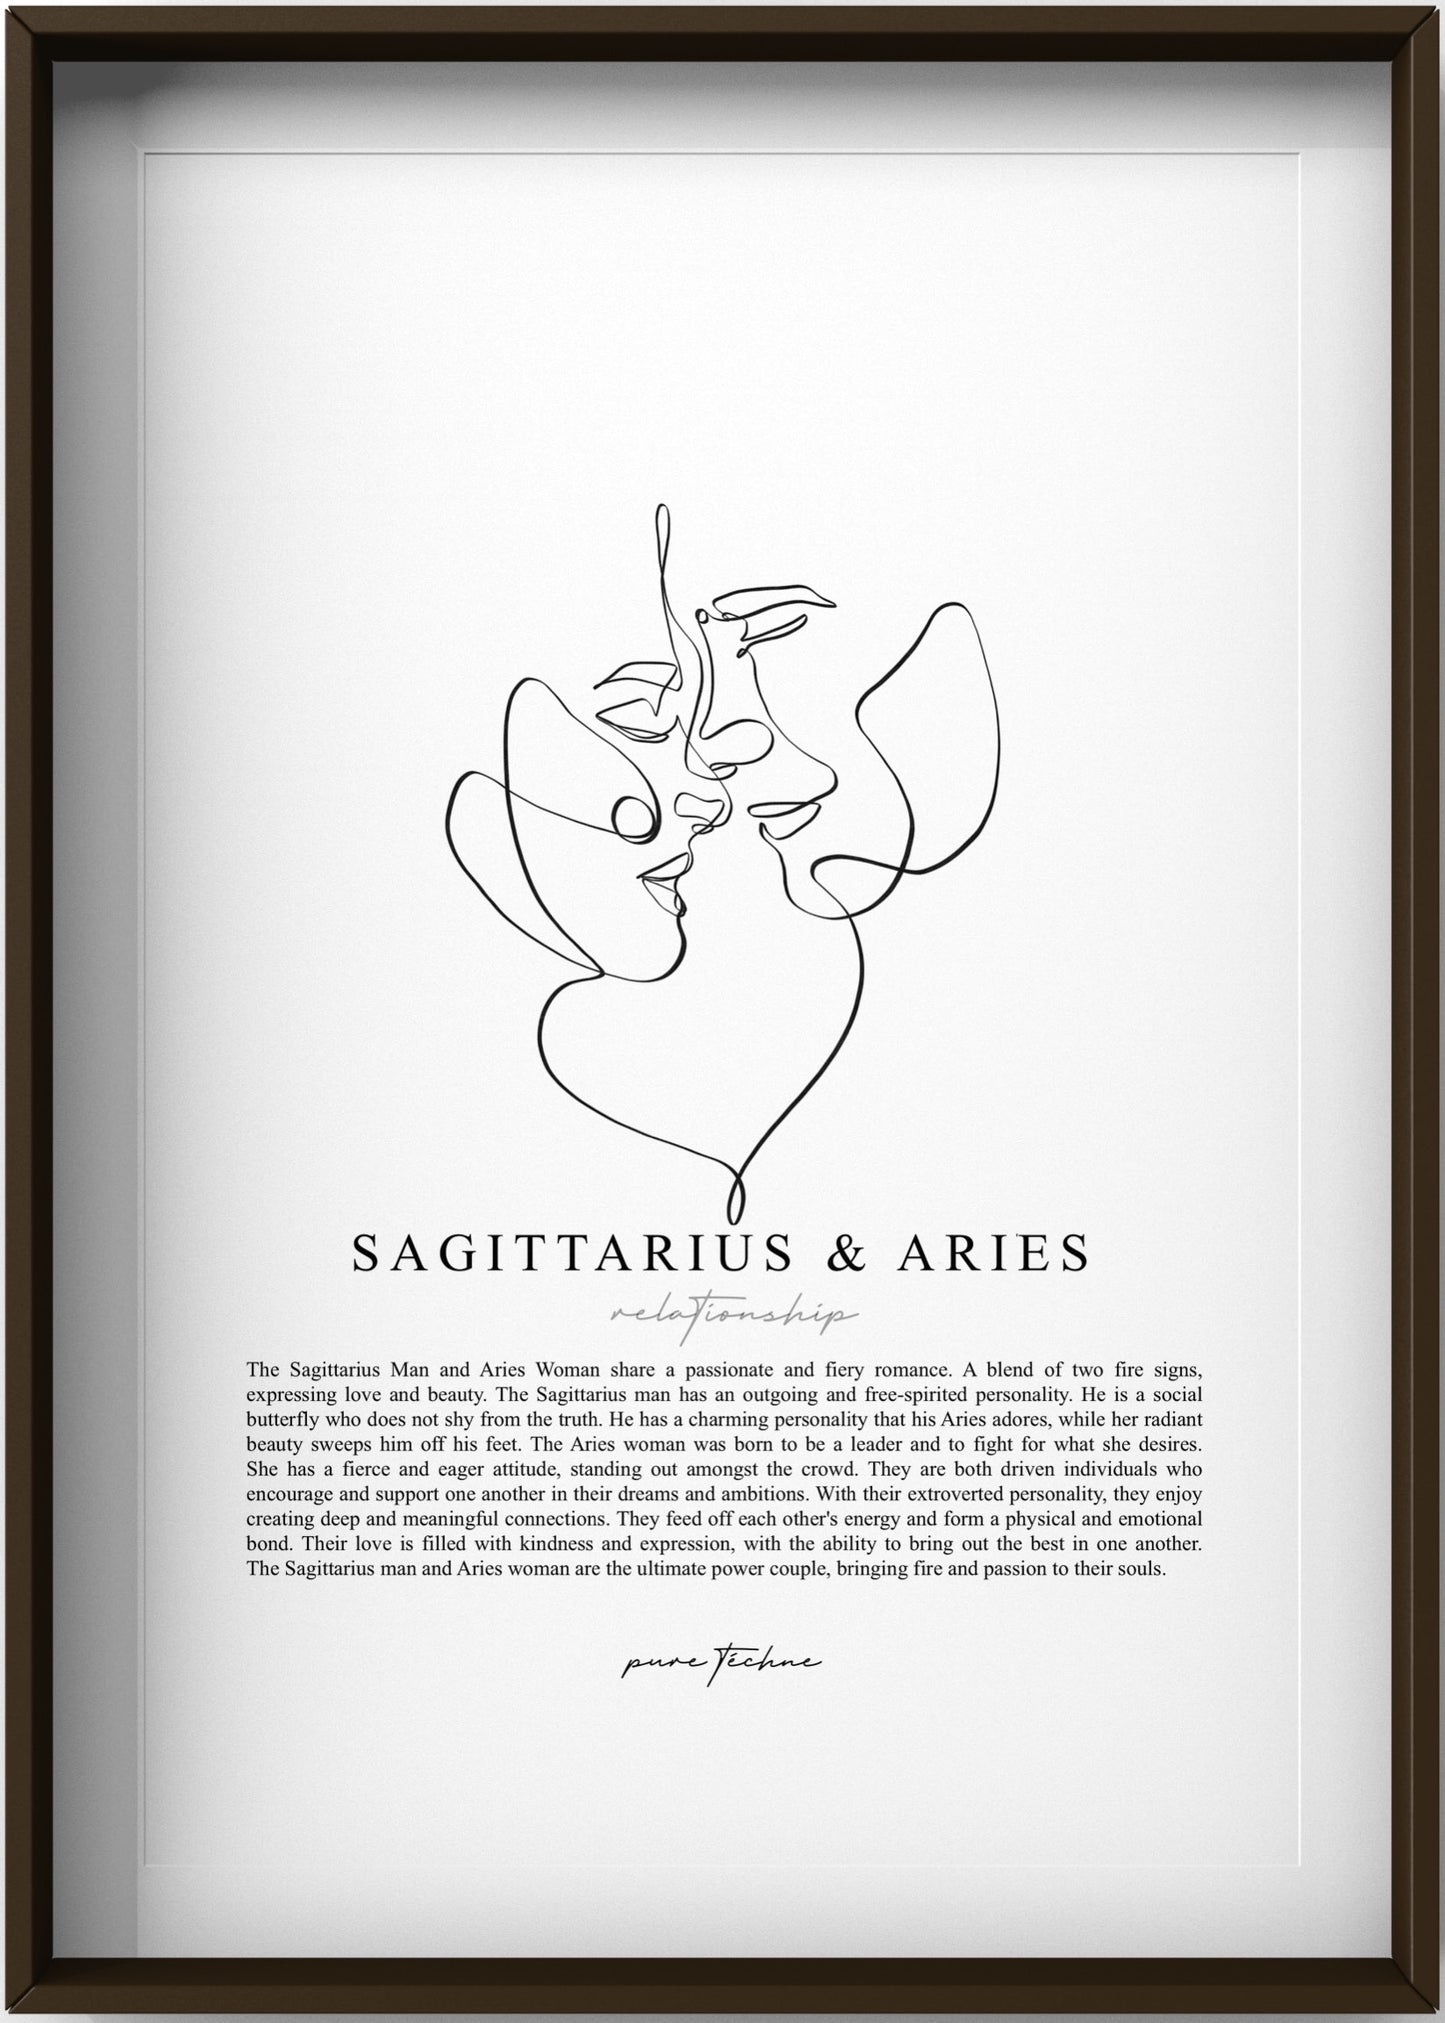 Sagittarius Man & Aries Woman